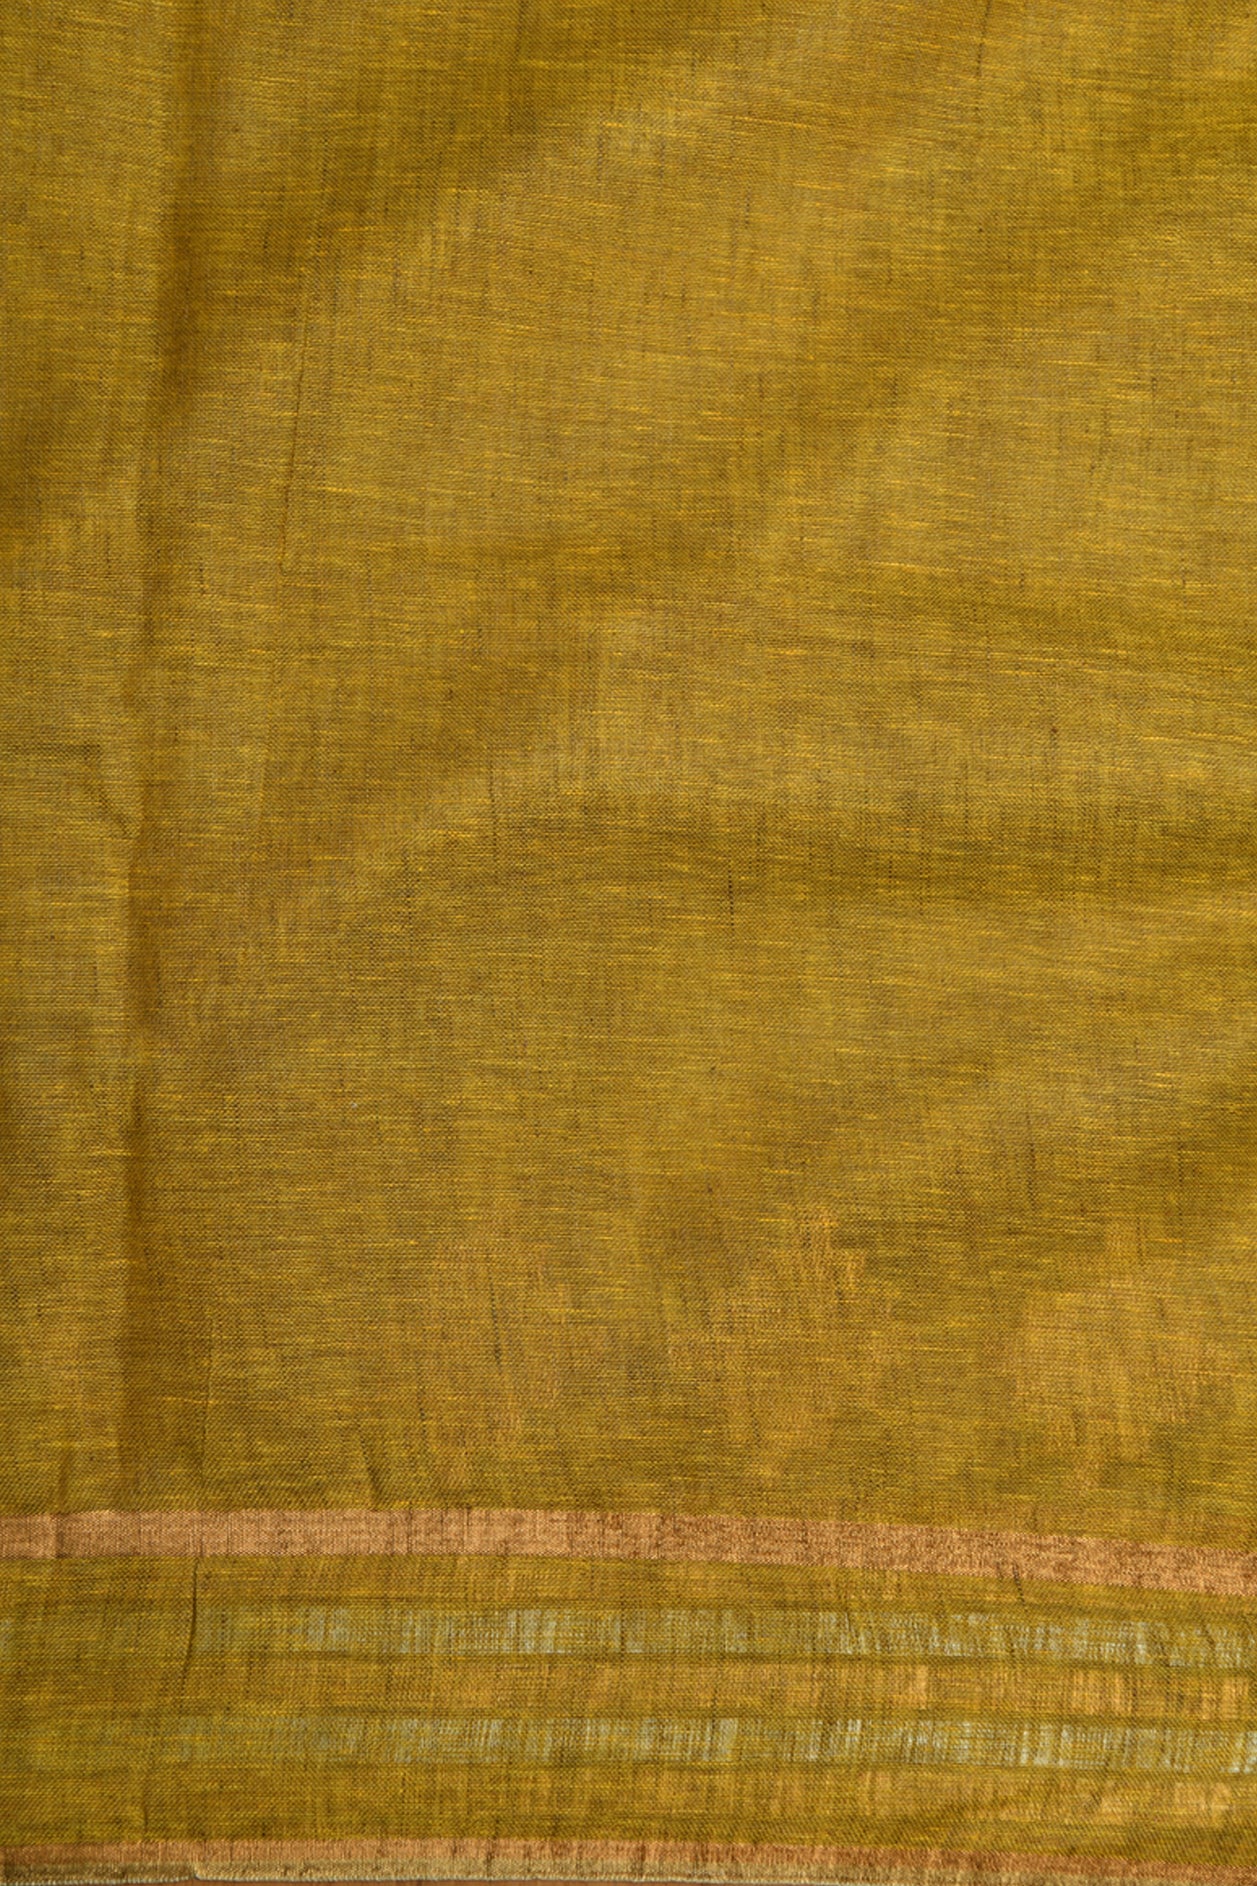 Gold And Silver Zari Olive Green Linen Cotton Saree